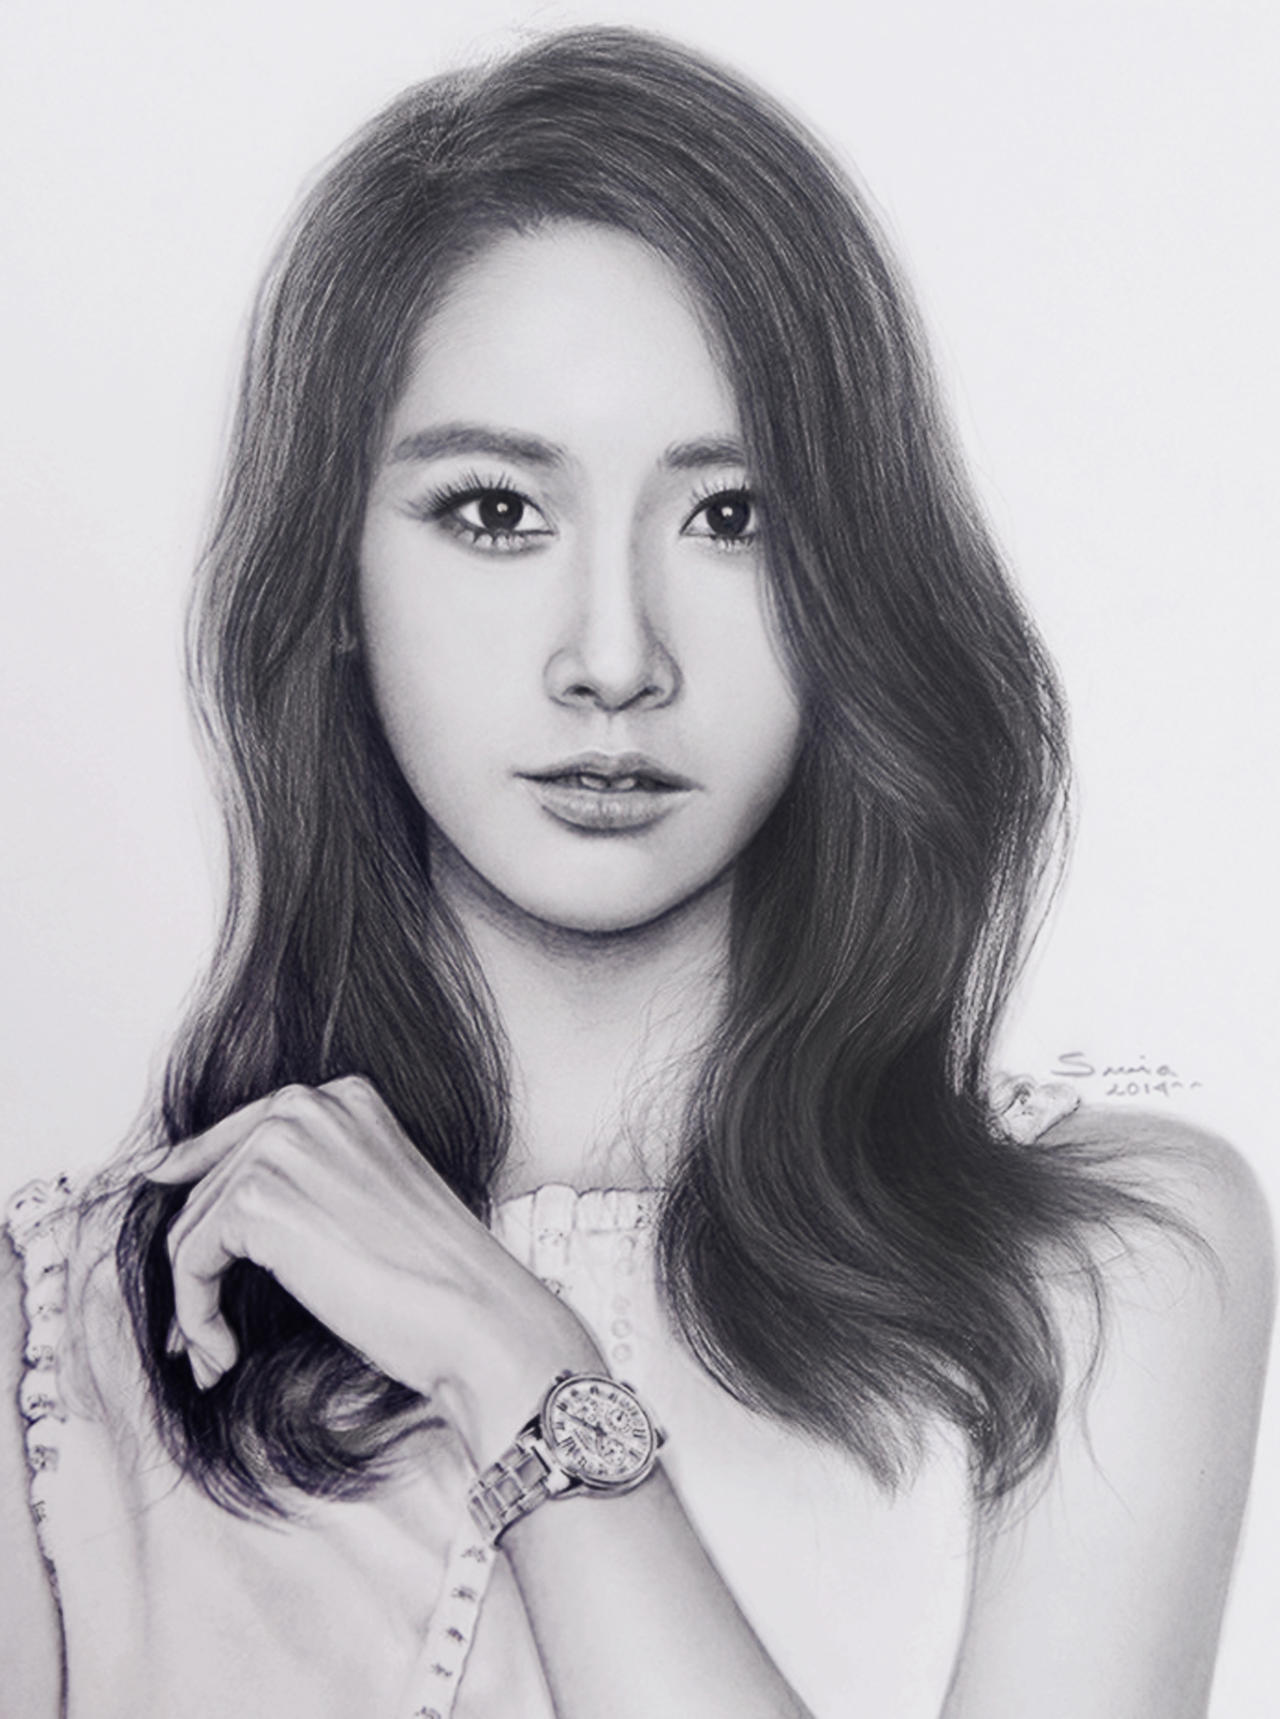 Yoona SNSD Girls Generation by suryjmz on DeviantArt